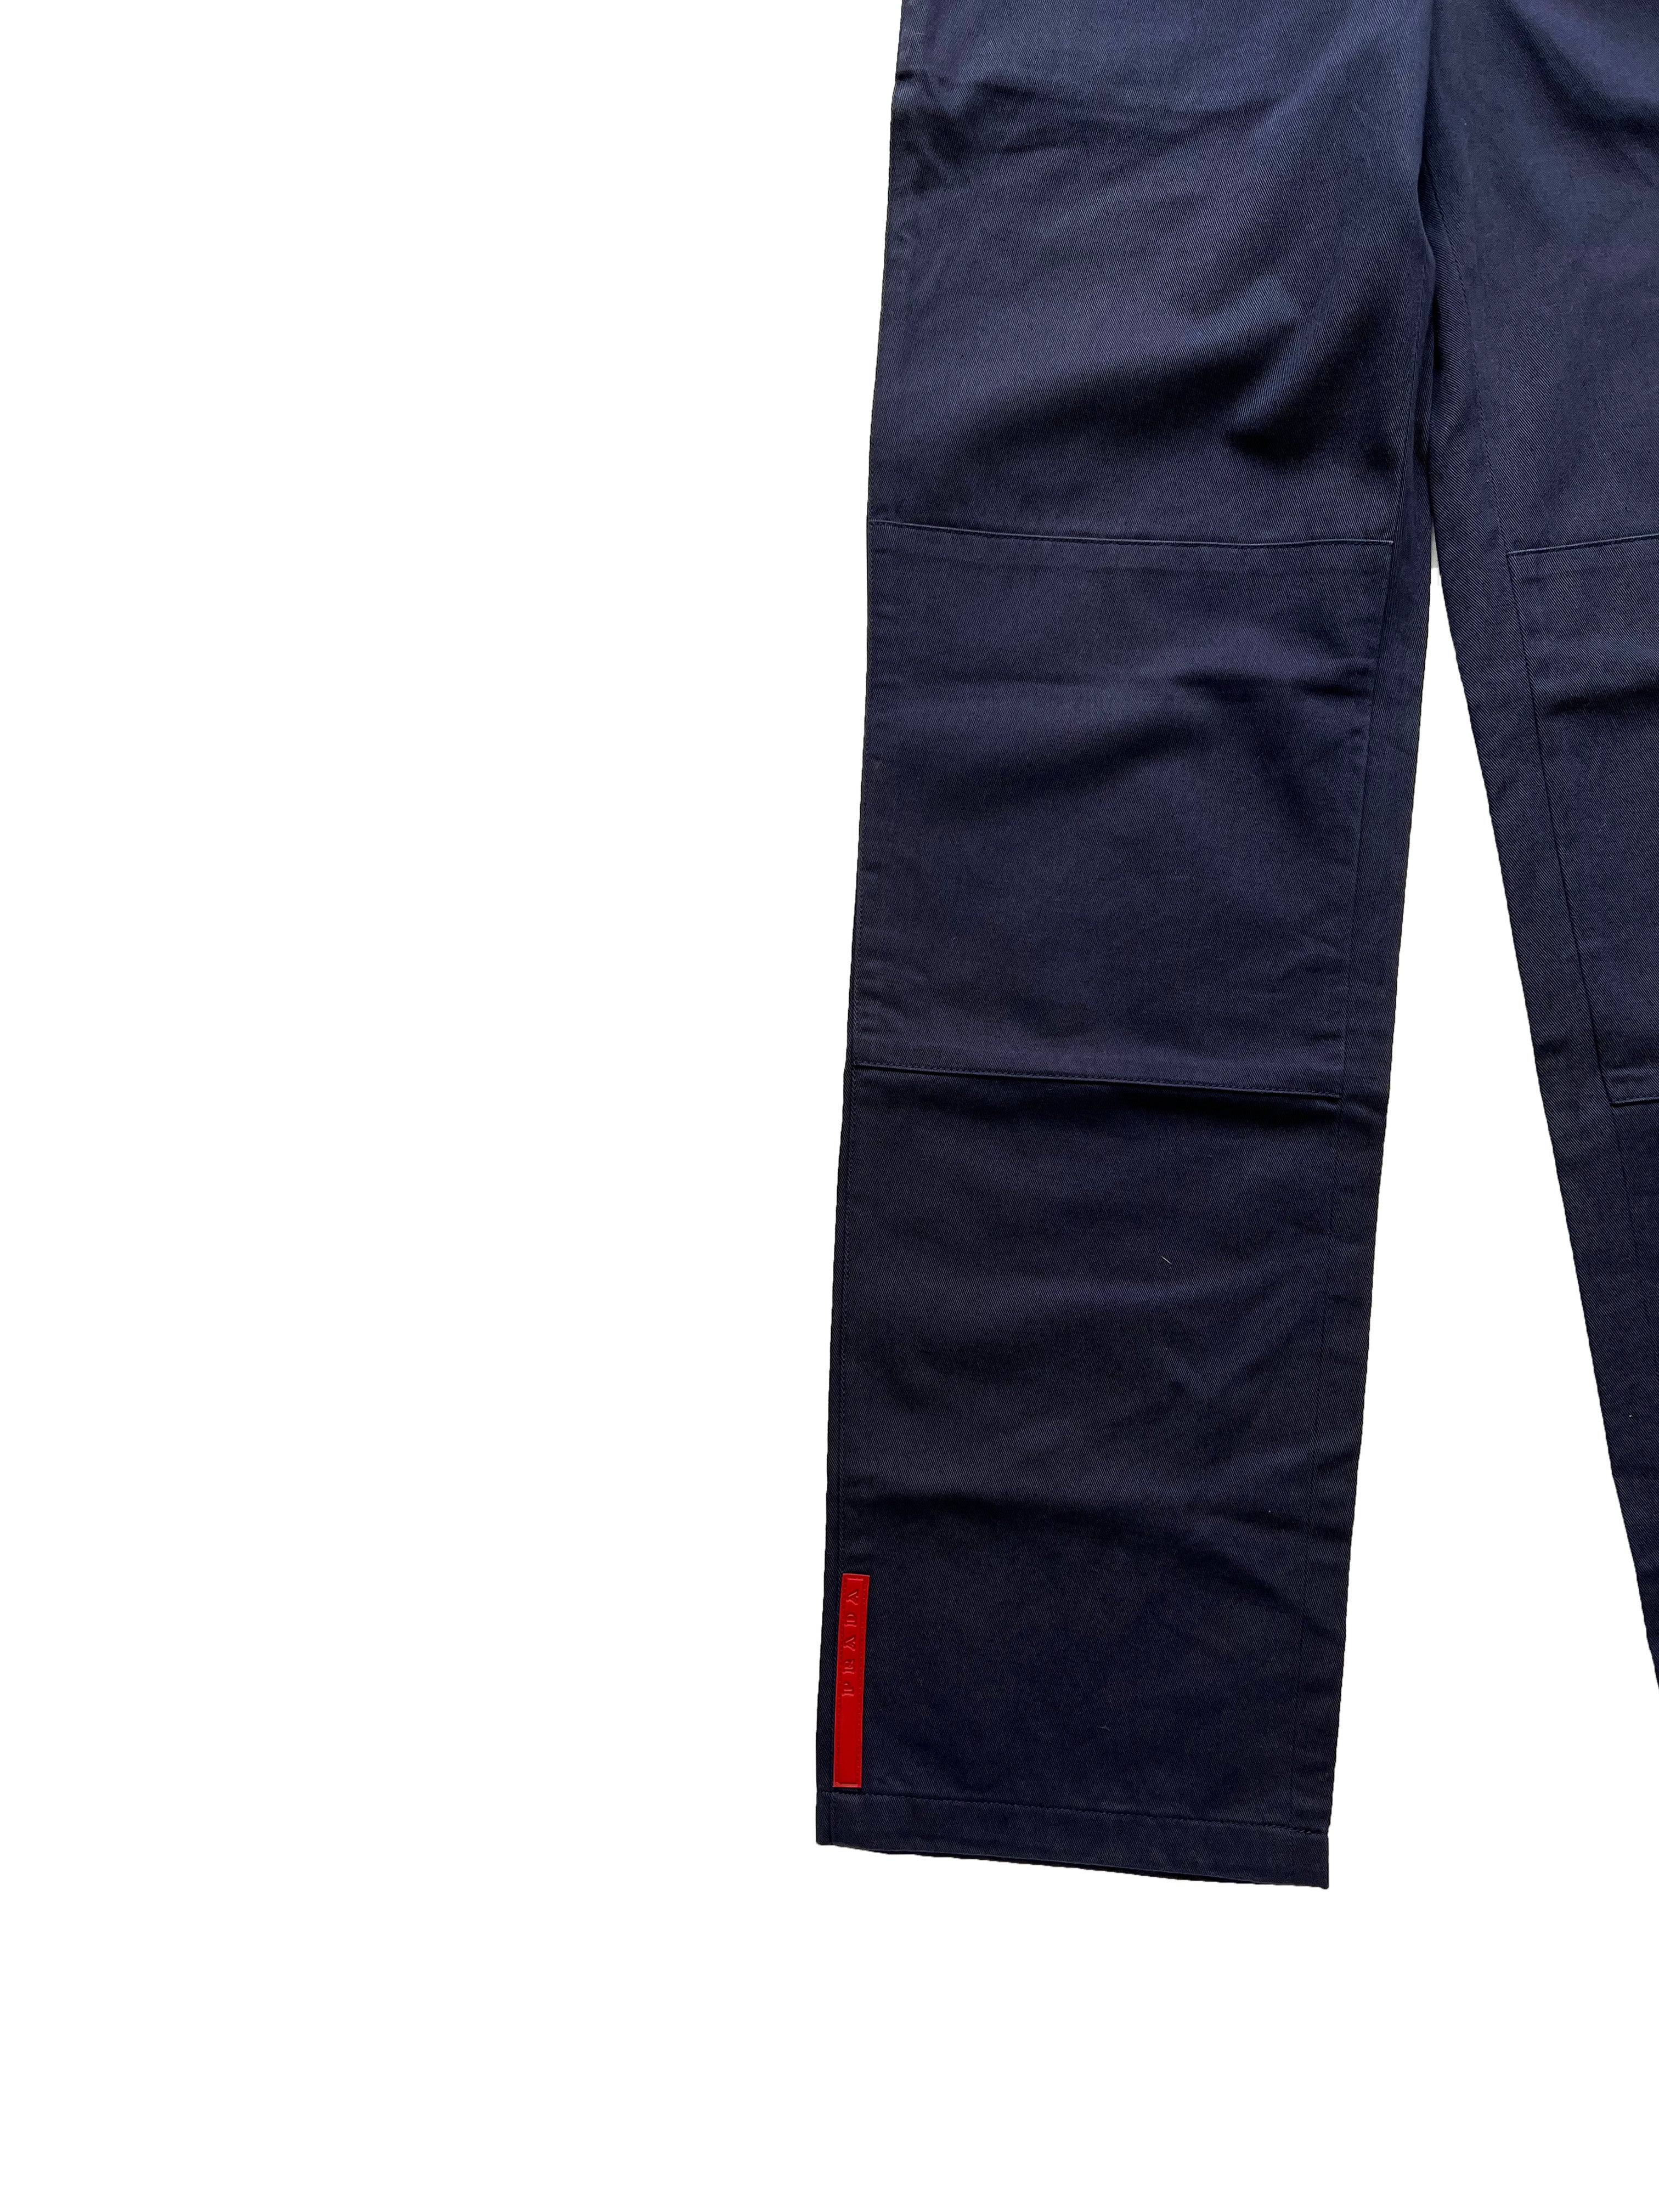 Prada Sport Navy Red Tab Trousers 00's